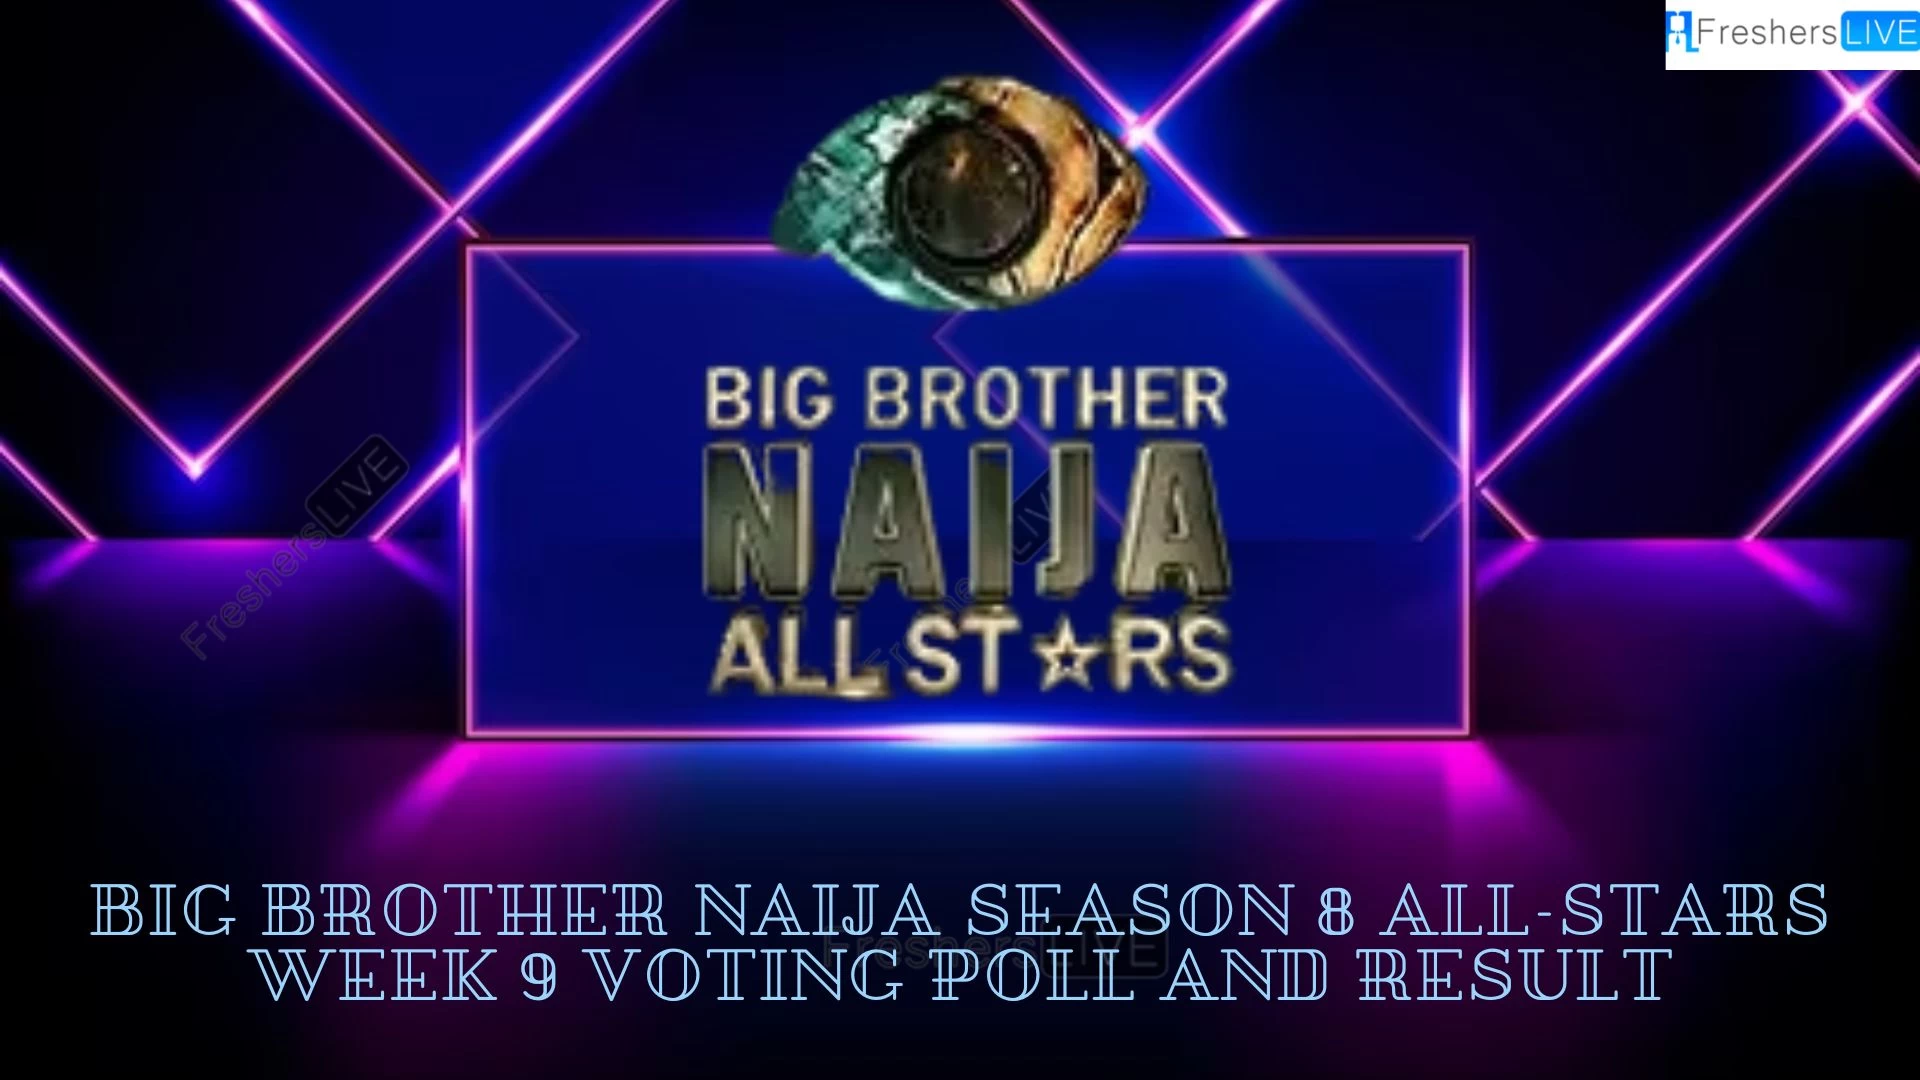 Big Brother Naija Season 8 All-stars Week 9 Voting Poll and Result